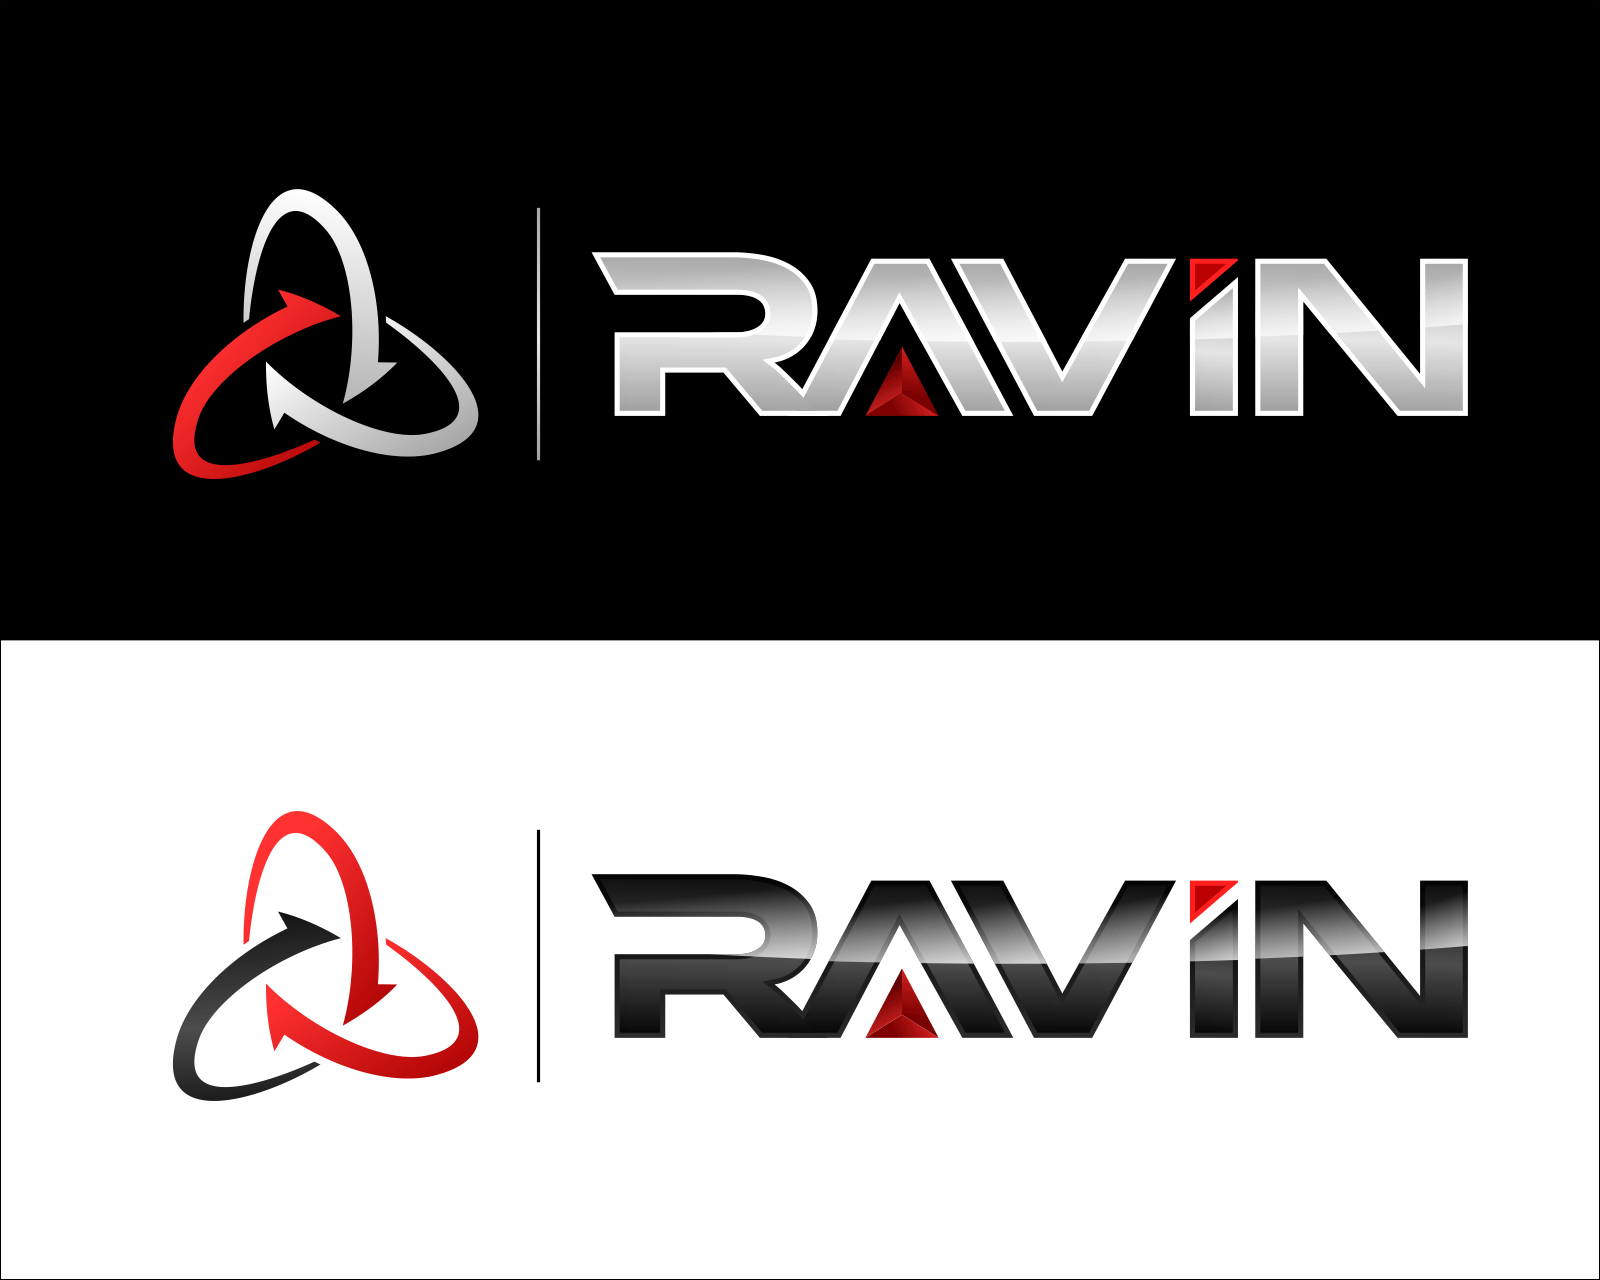 Ravin Logo - Logo Design Contest for RAVIN | Hatchwise